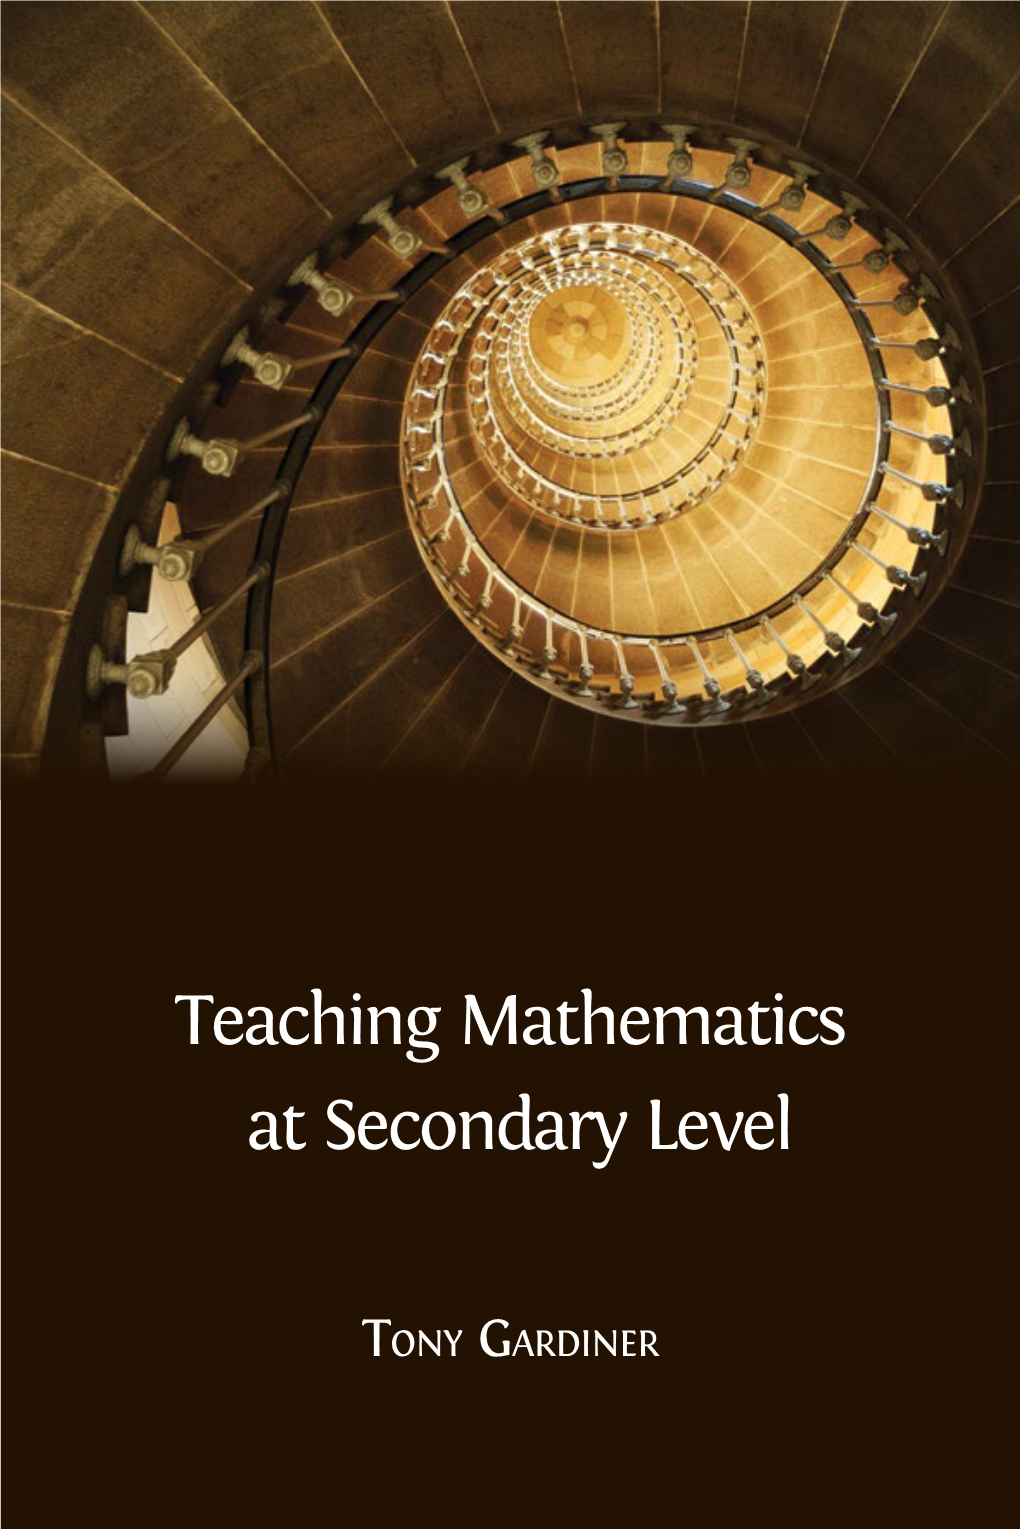 Teaching Mathematics at Secondary Level